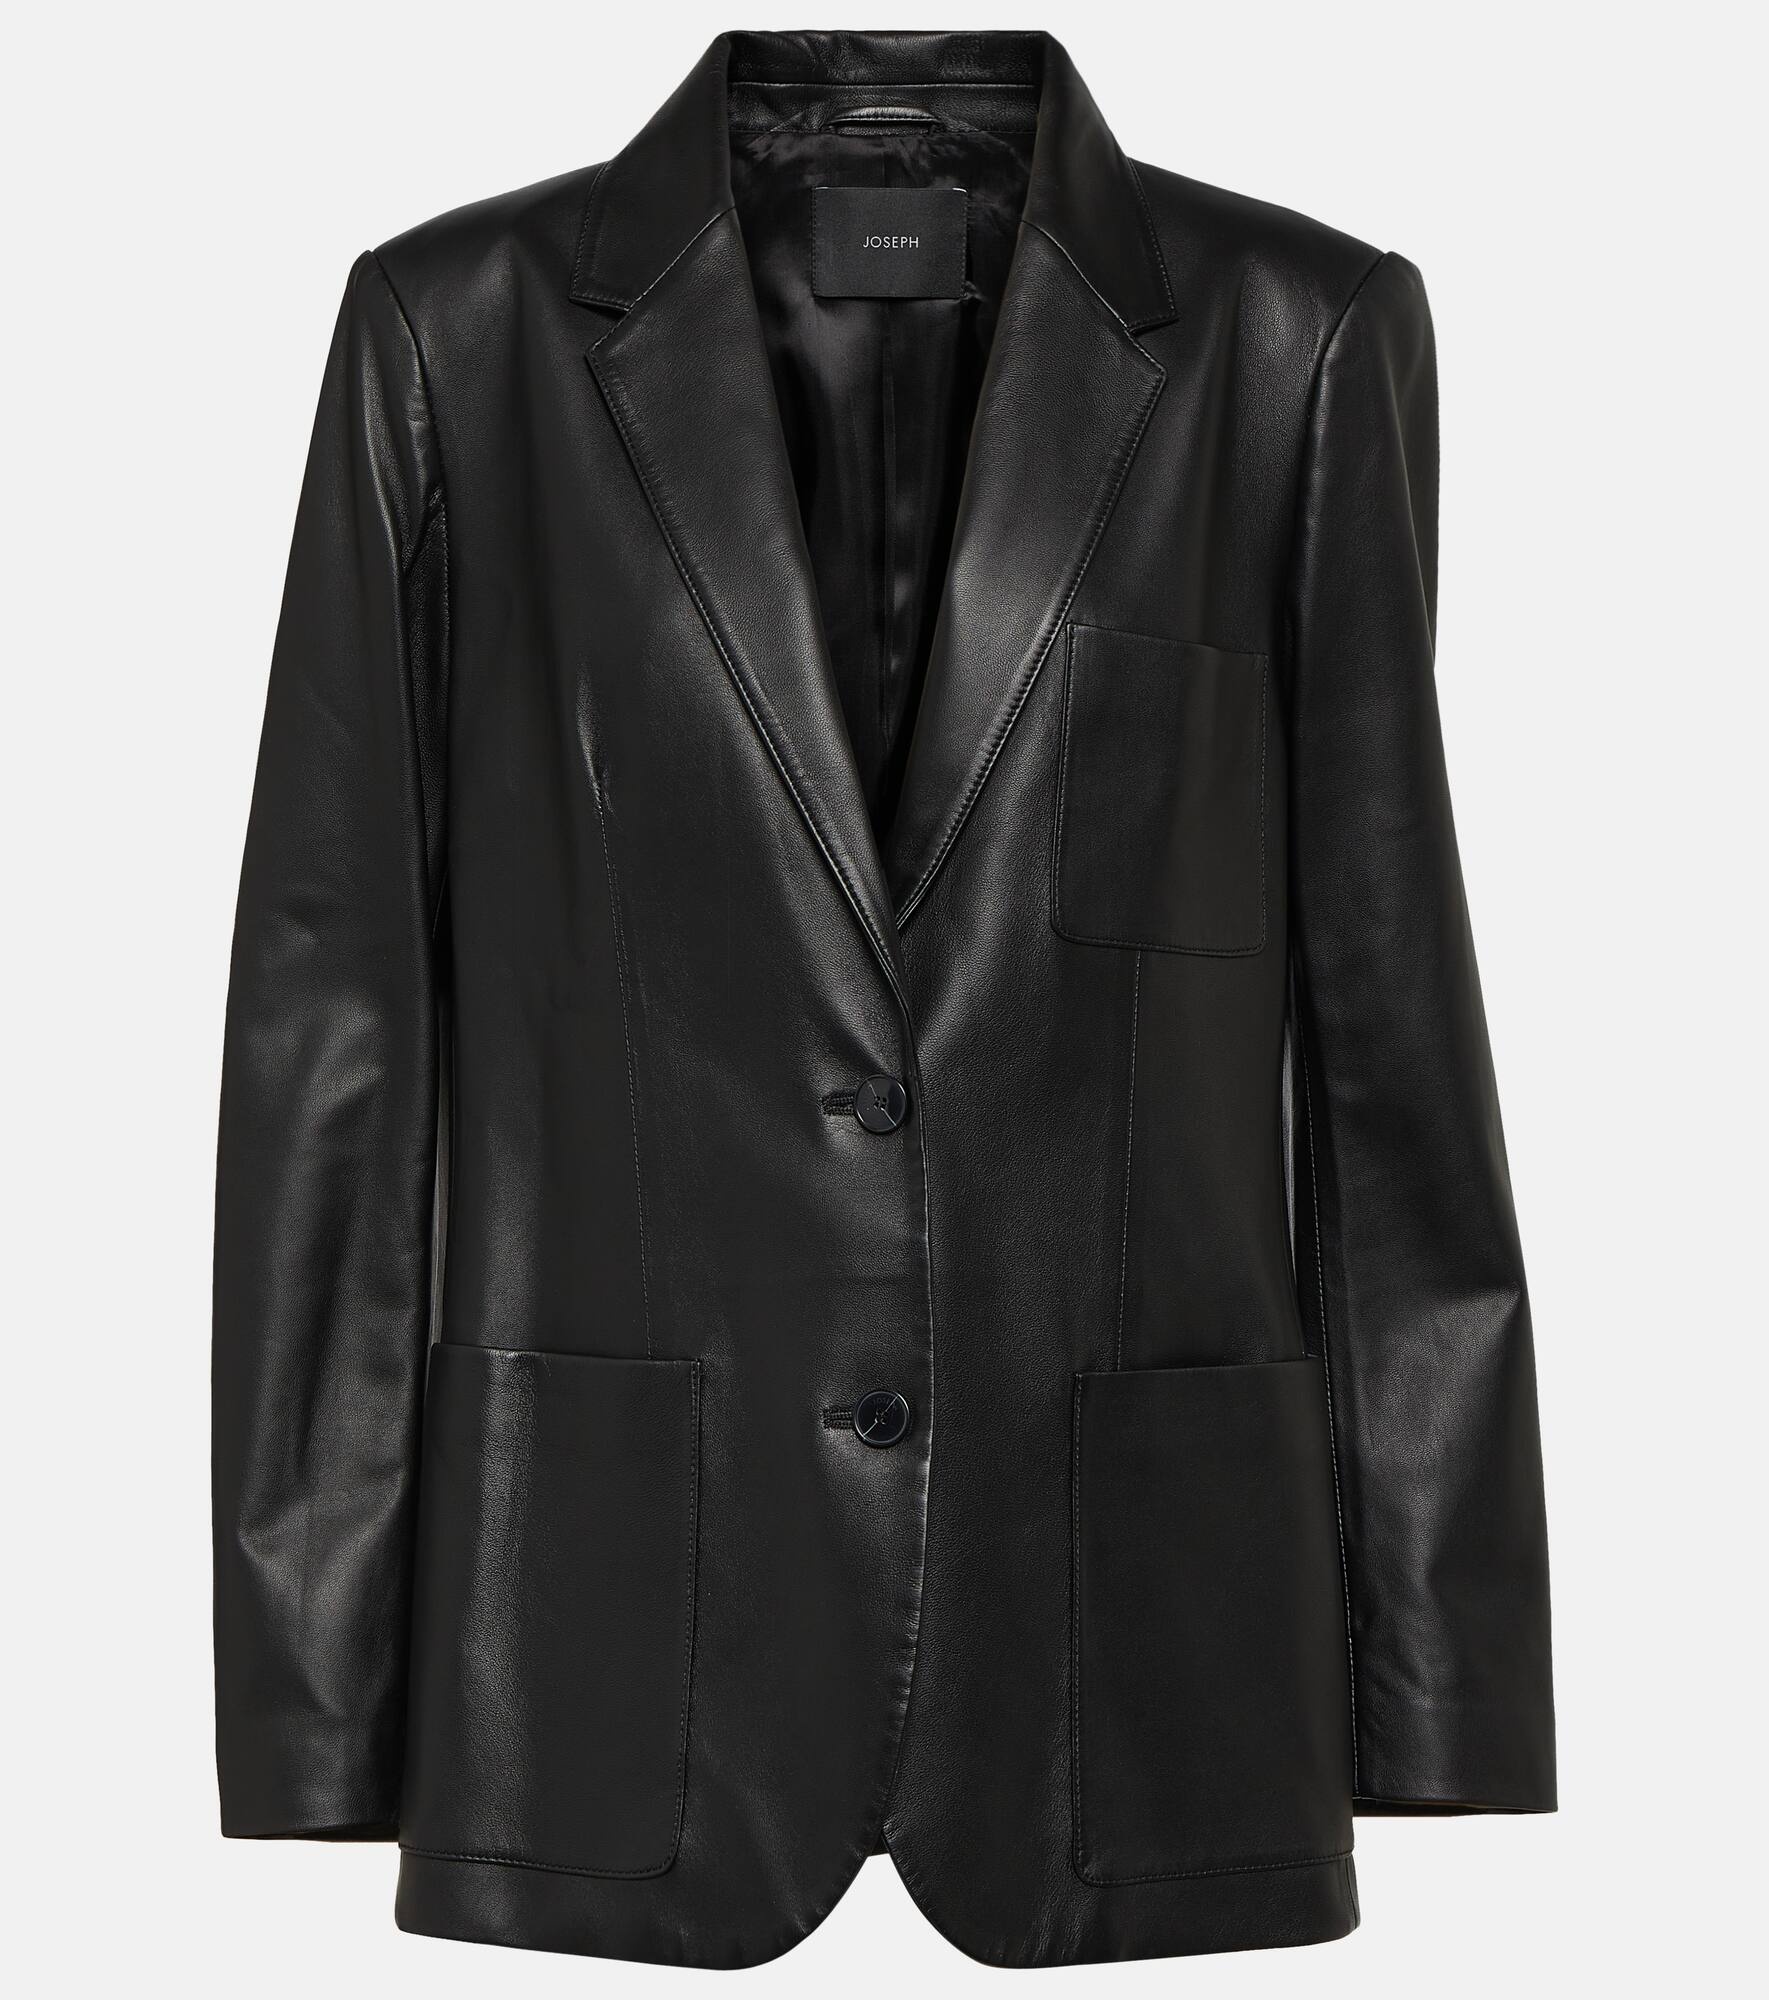 Jacques leather blazer - 1